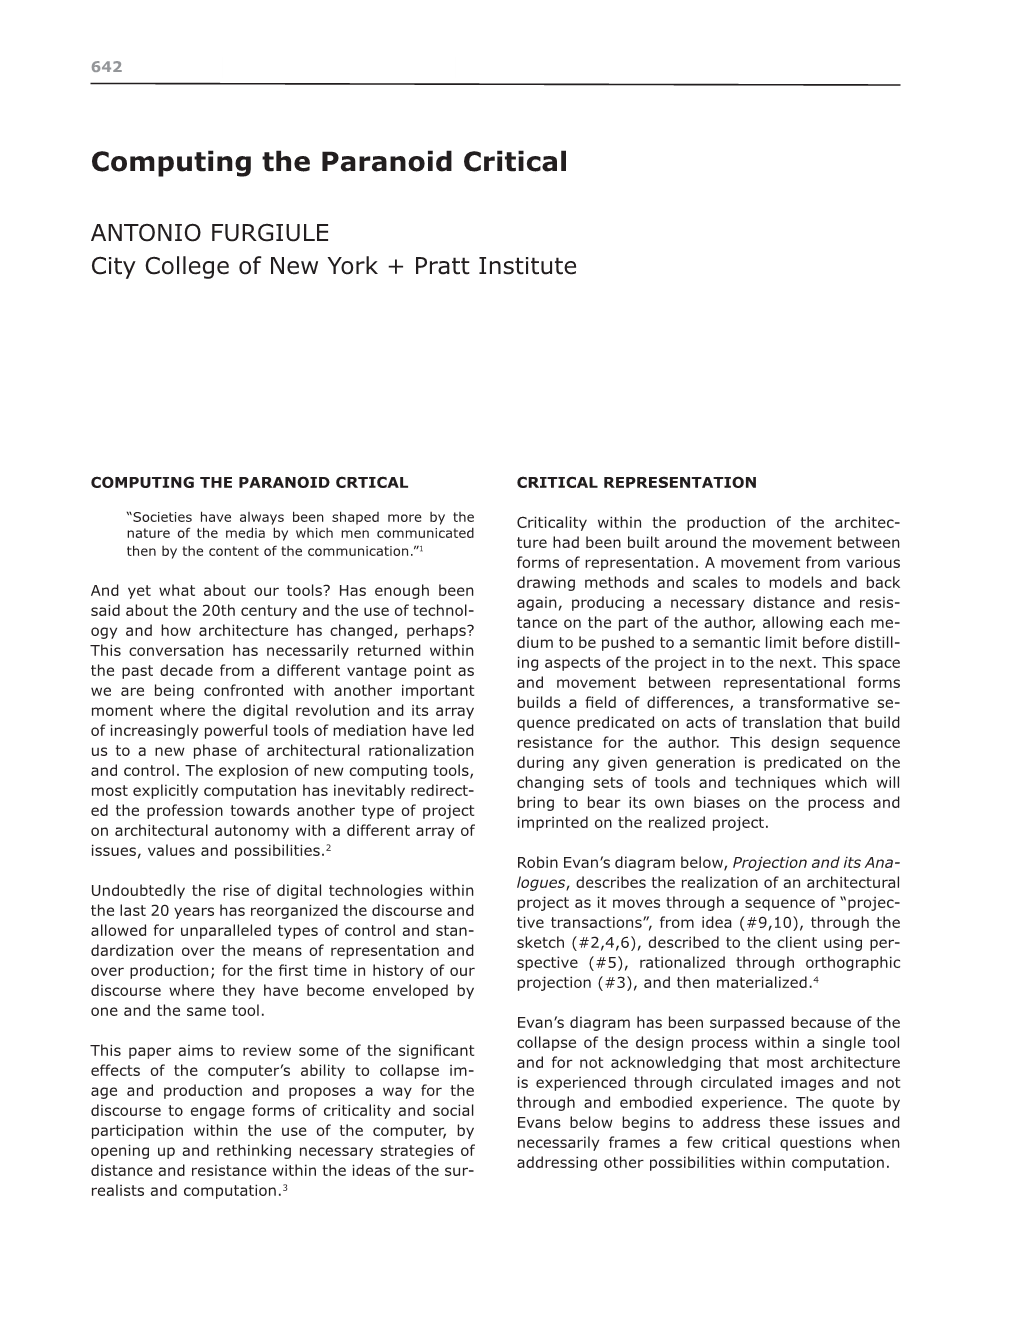 Computing the Paranoid Critical